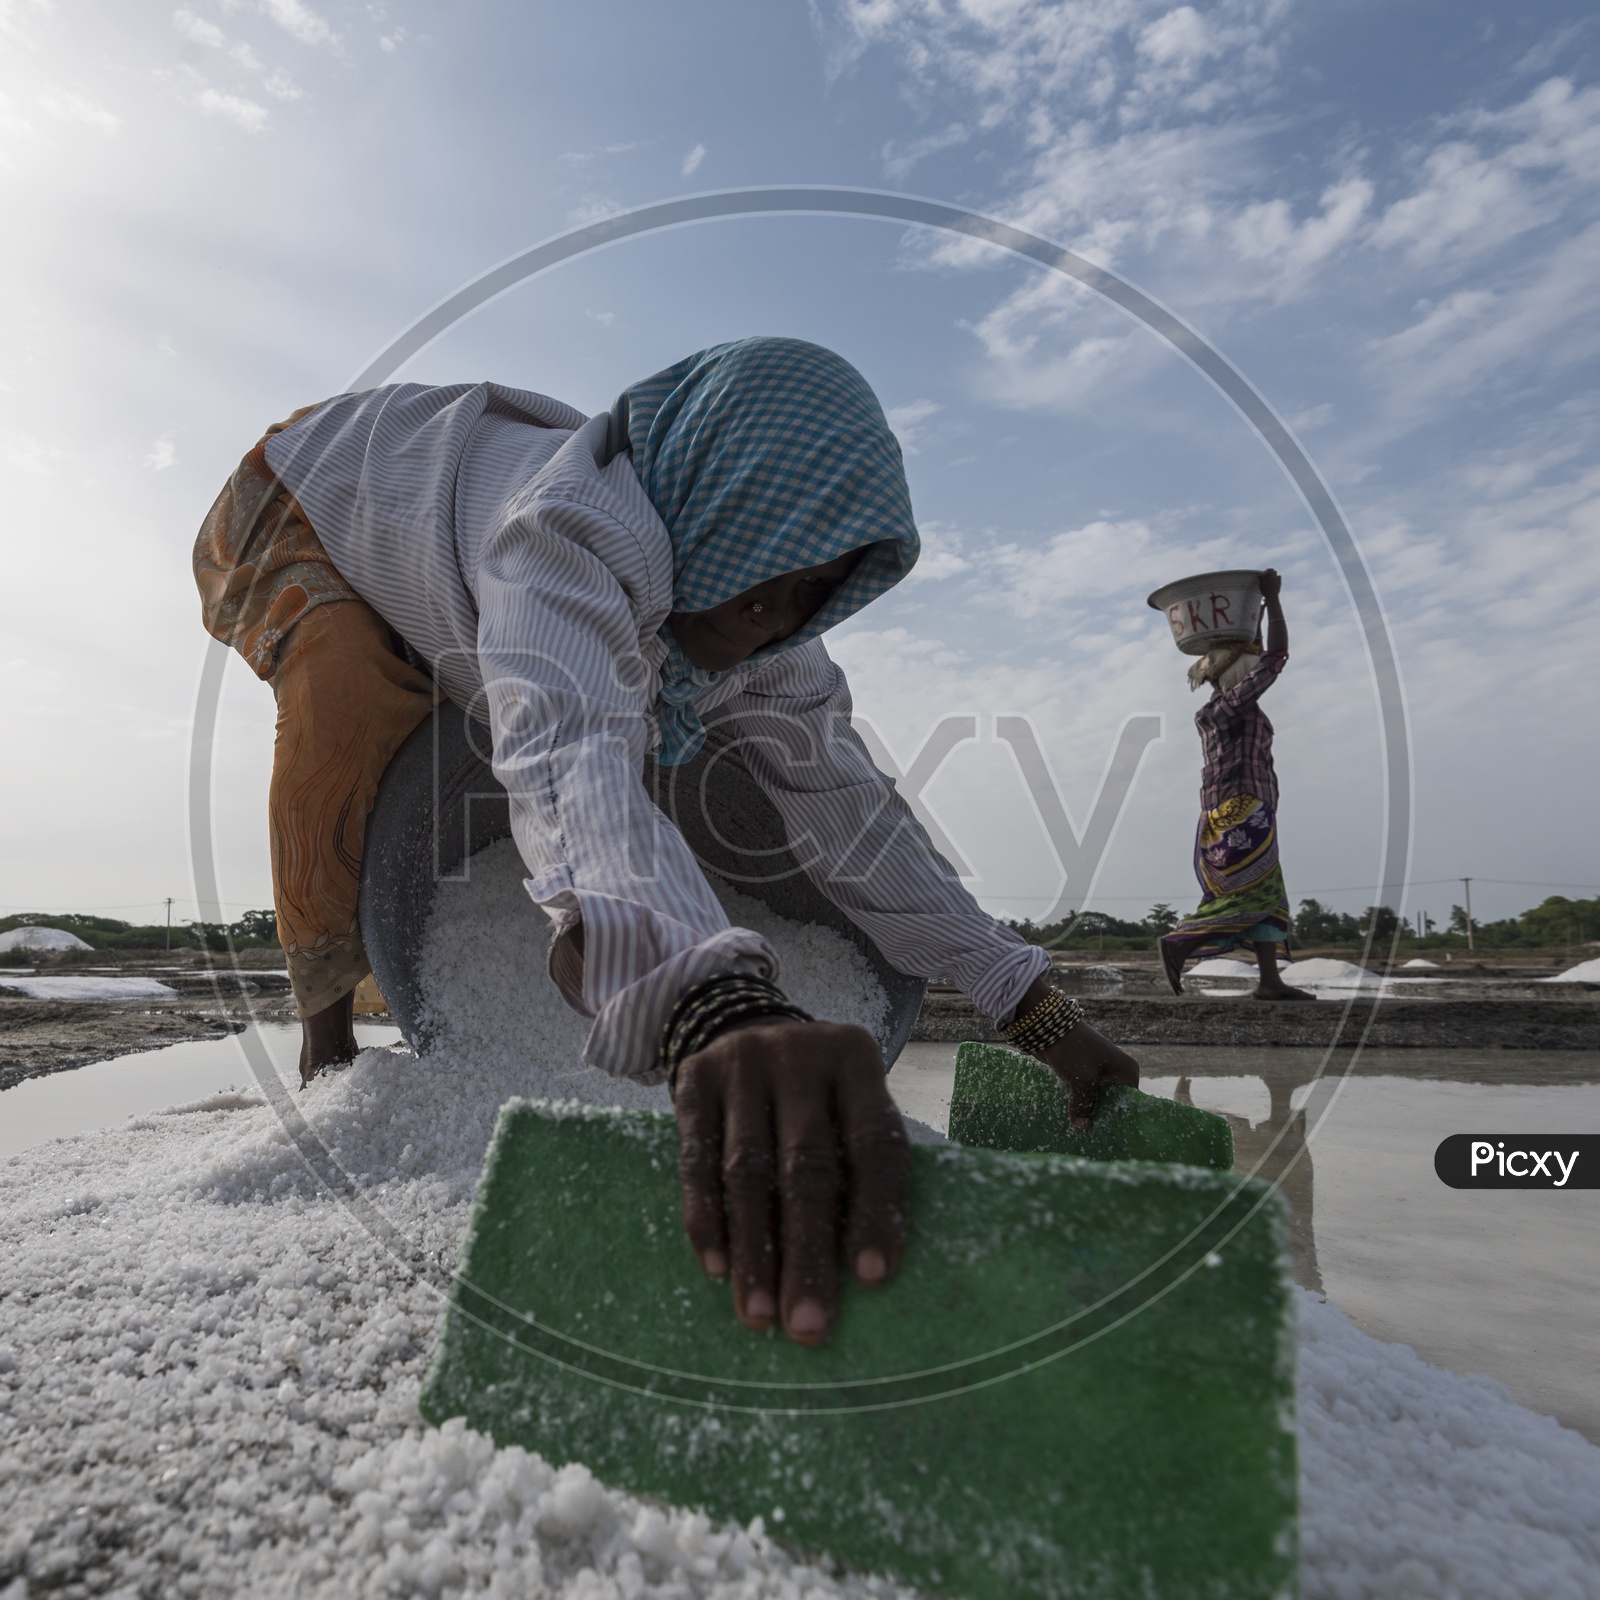 Harvesting Salt in Traditional Way